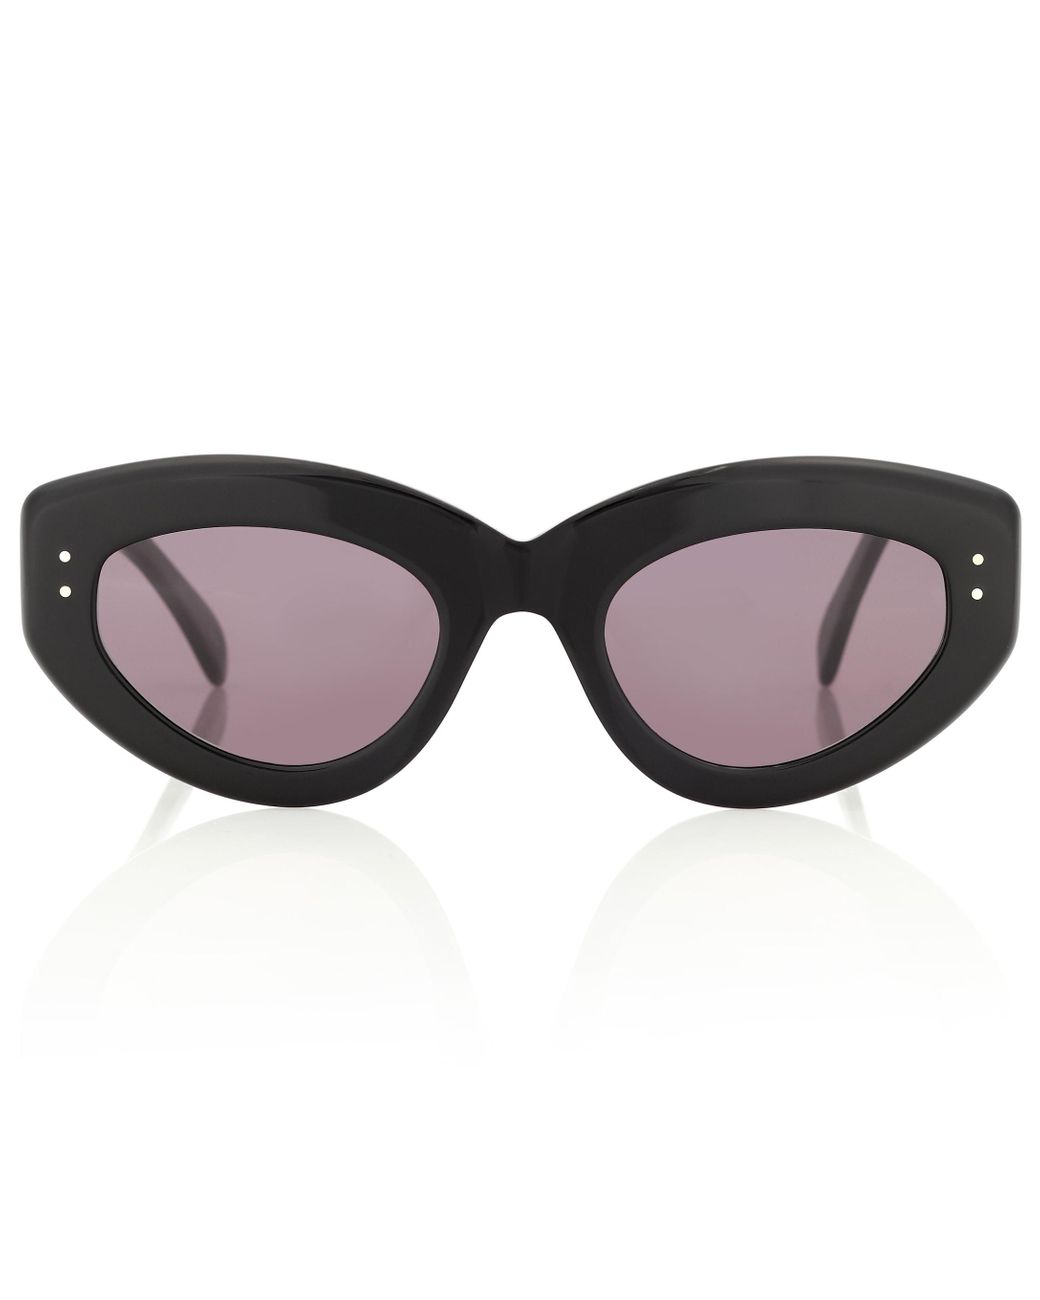 Alaïa Cat-eye Sunglasses in Black - Lyst